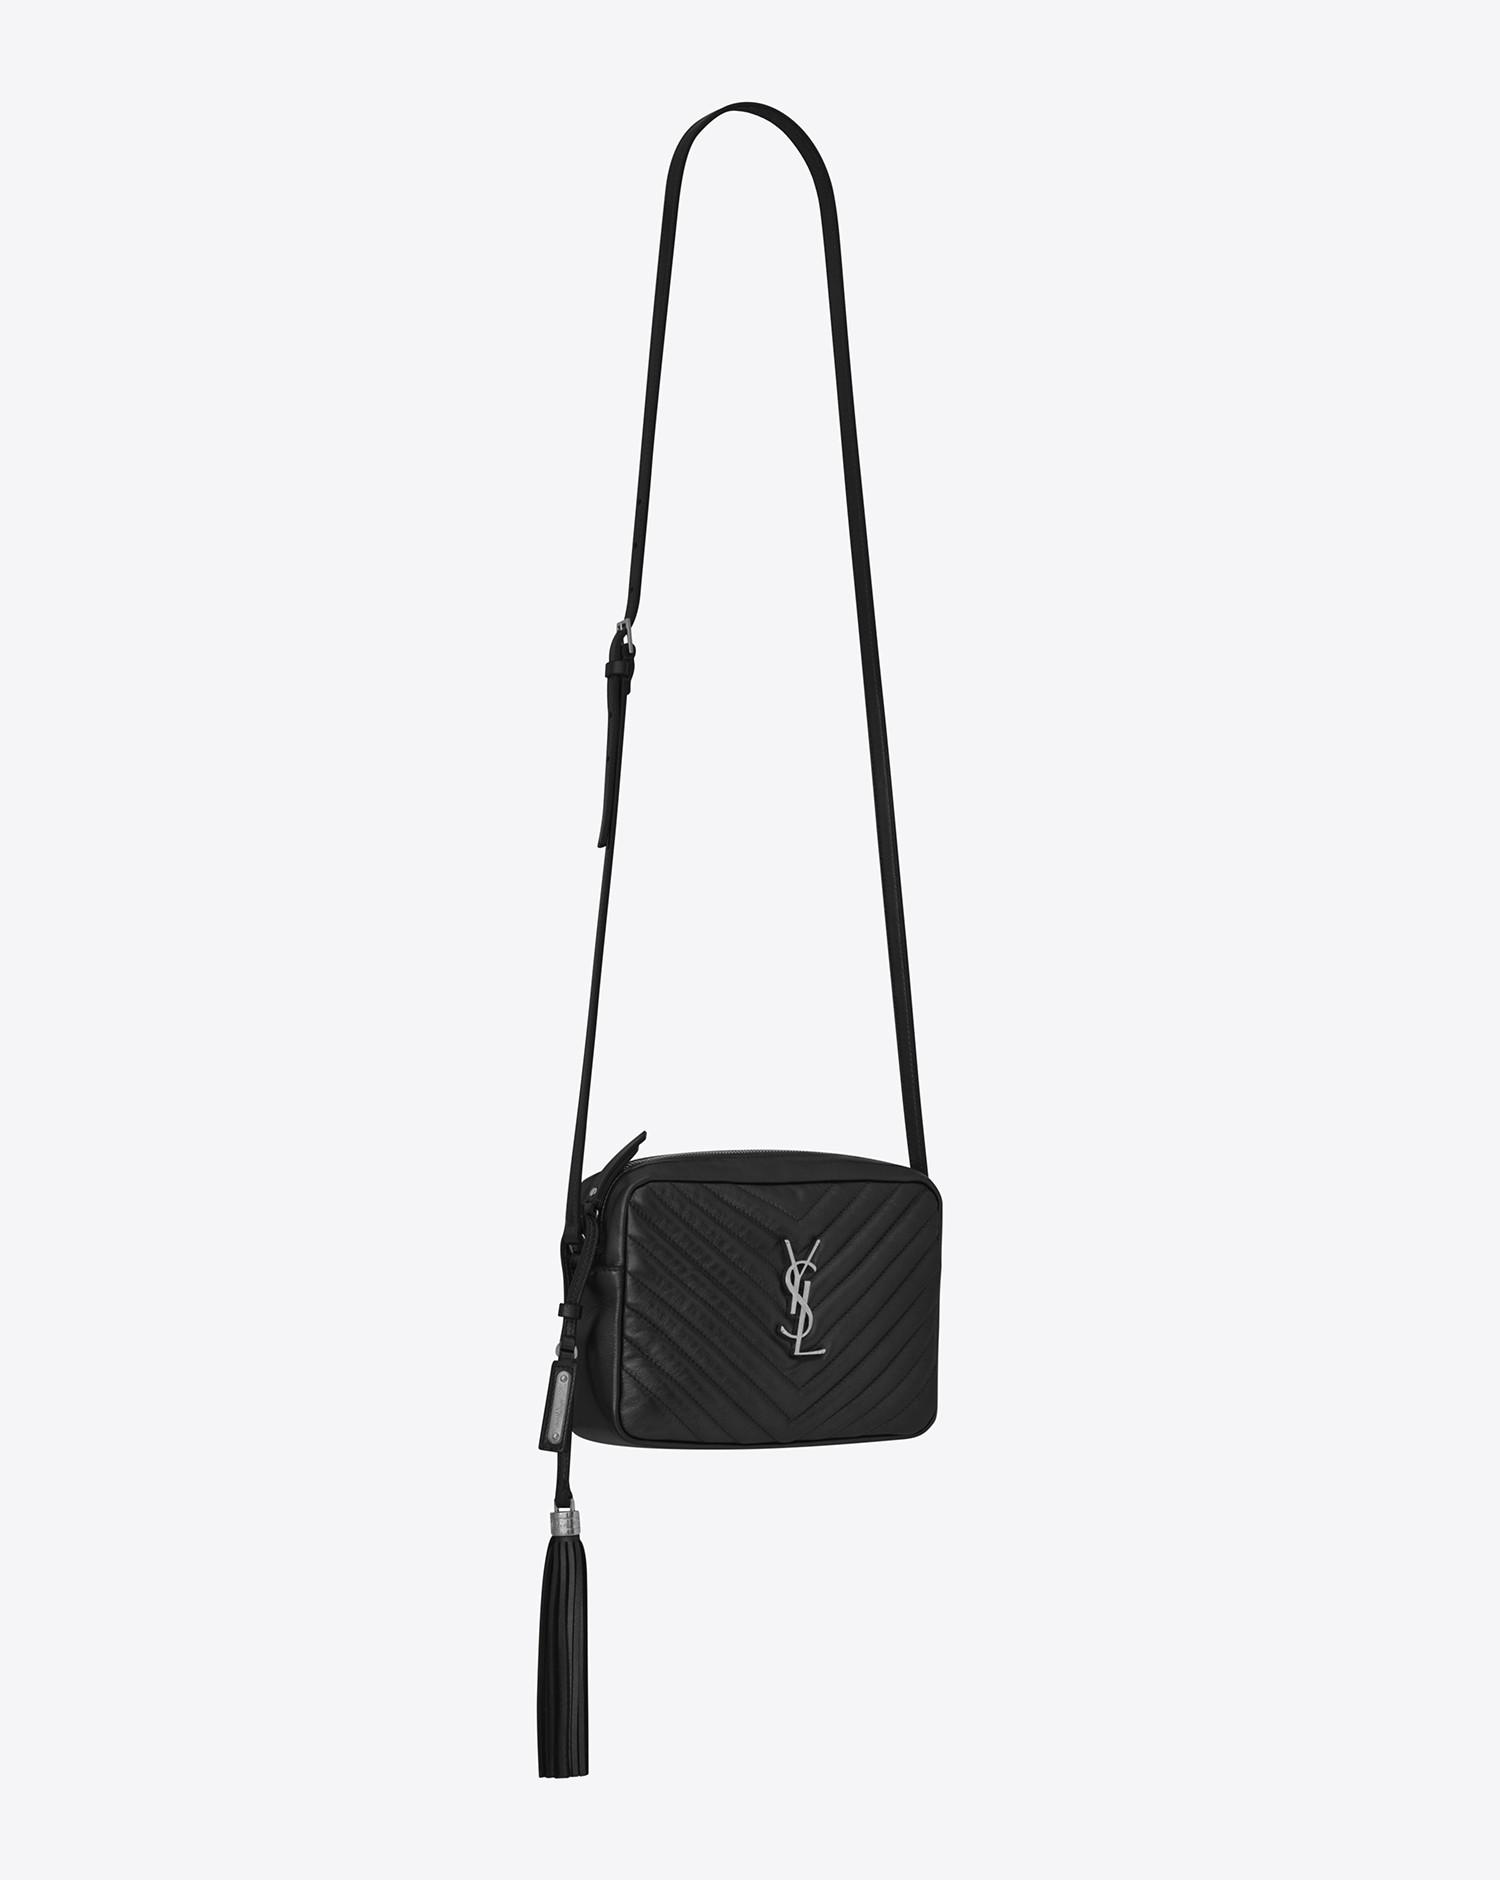 Saint Laurent Lou Small Matelassé Leather Camera Shoulder Bag in Black - Lyst